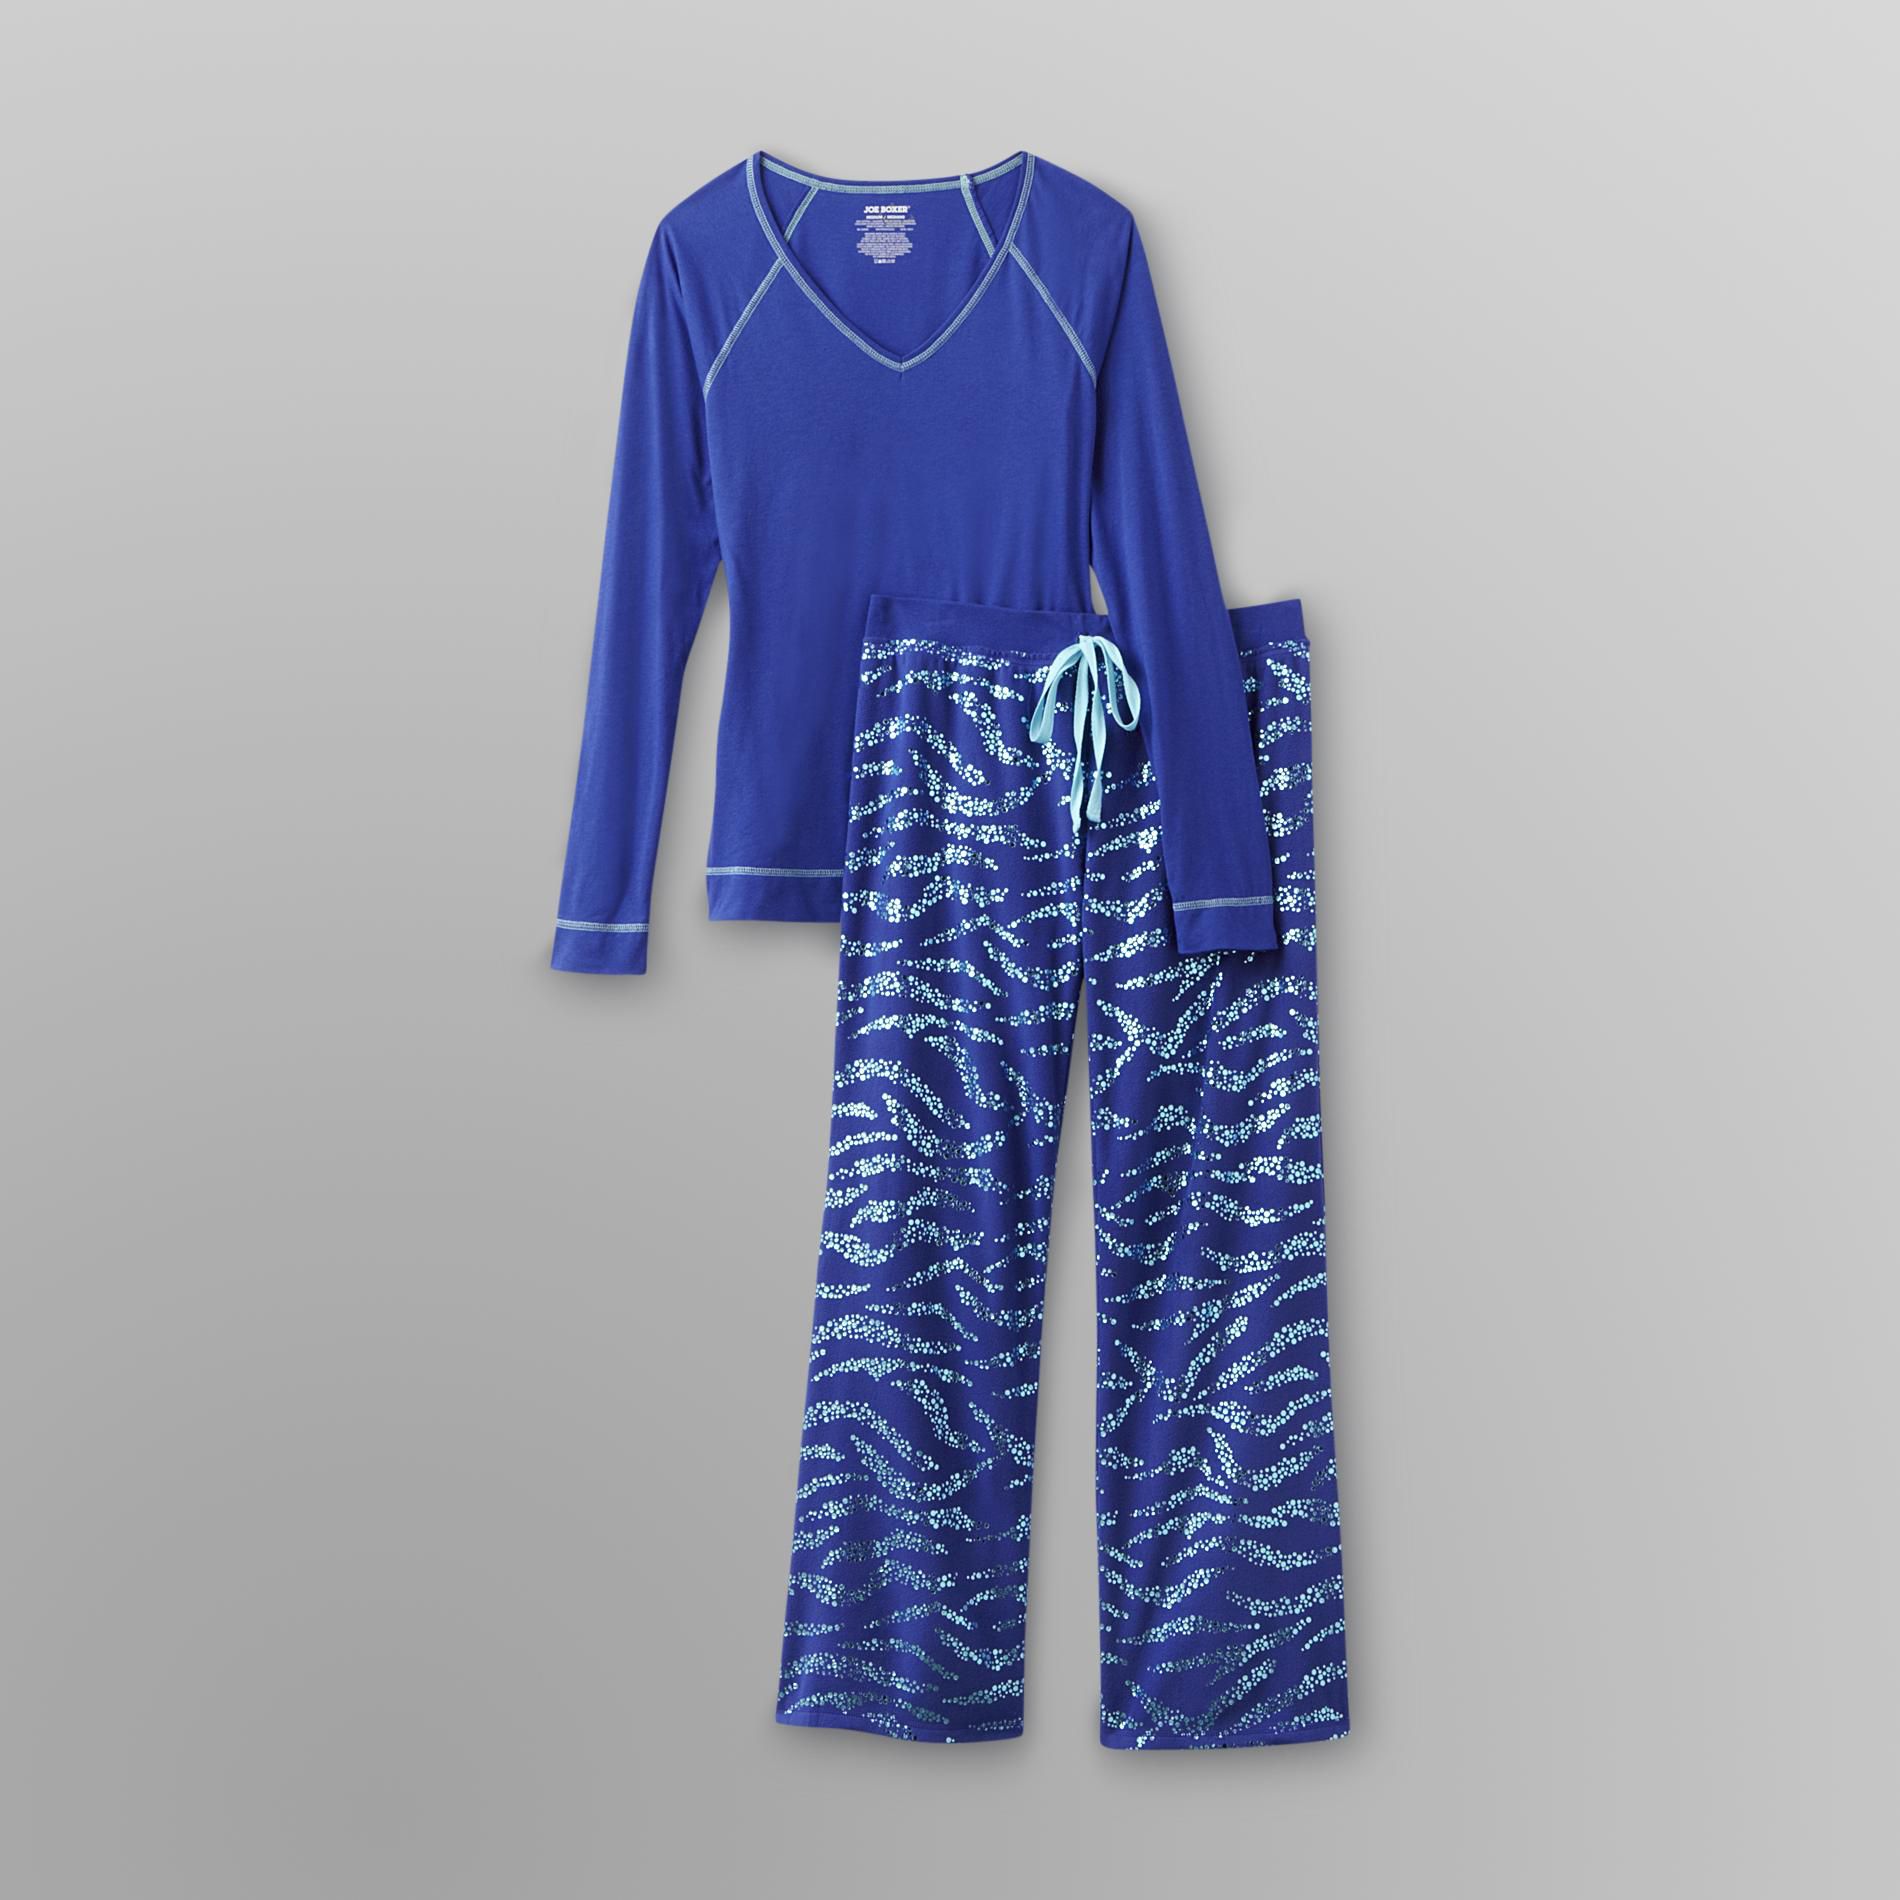 Joe Boxer Women's Pajamas - Zebra Print